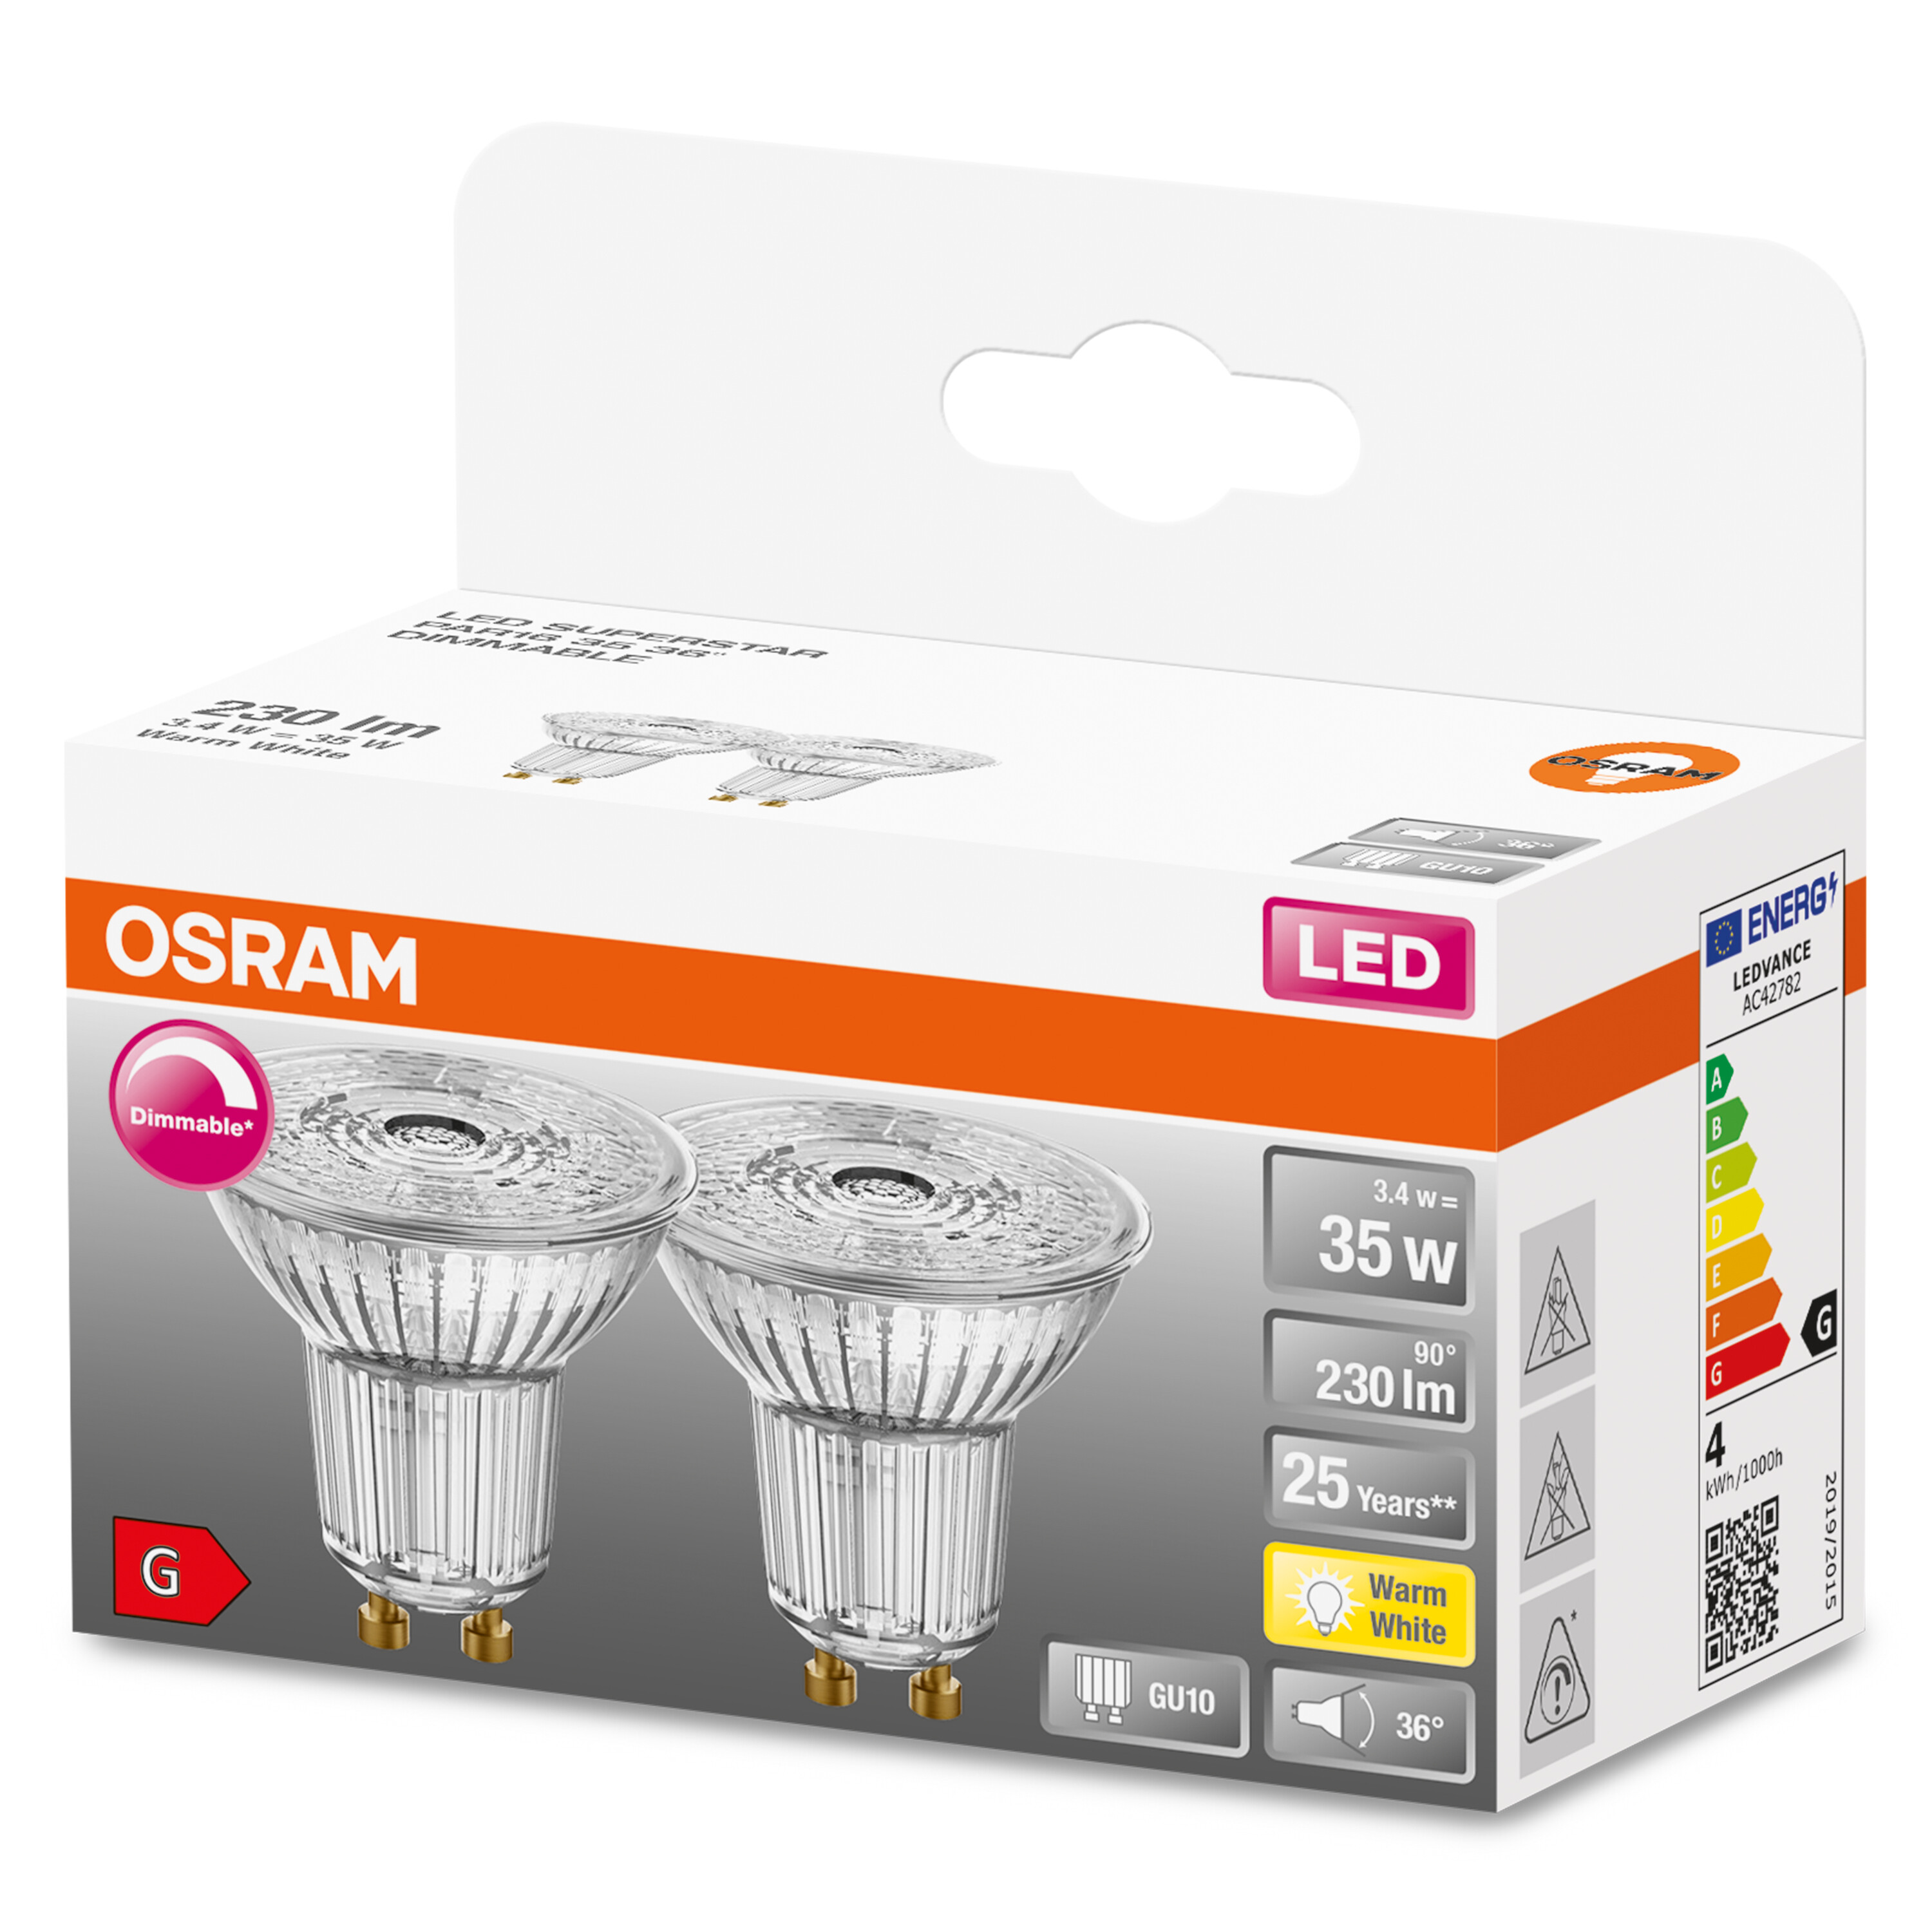 OSRAM  LED SUPERSTAR PAR16 LED 230 Lumen Lampe Warmweiß